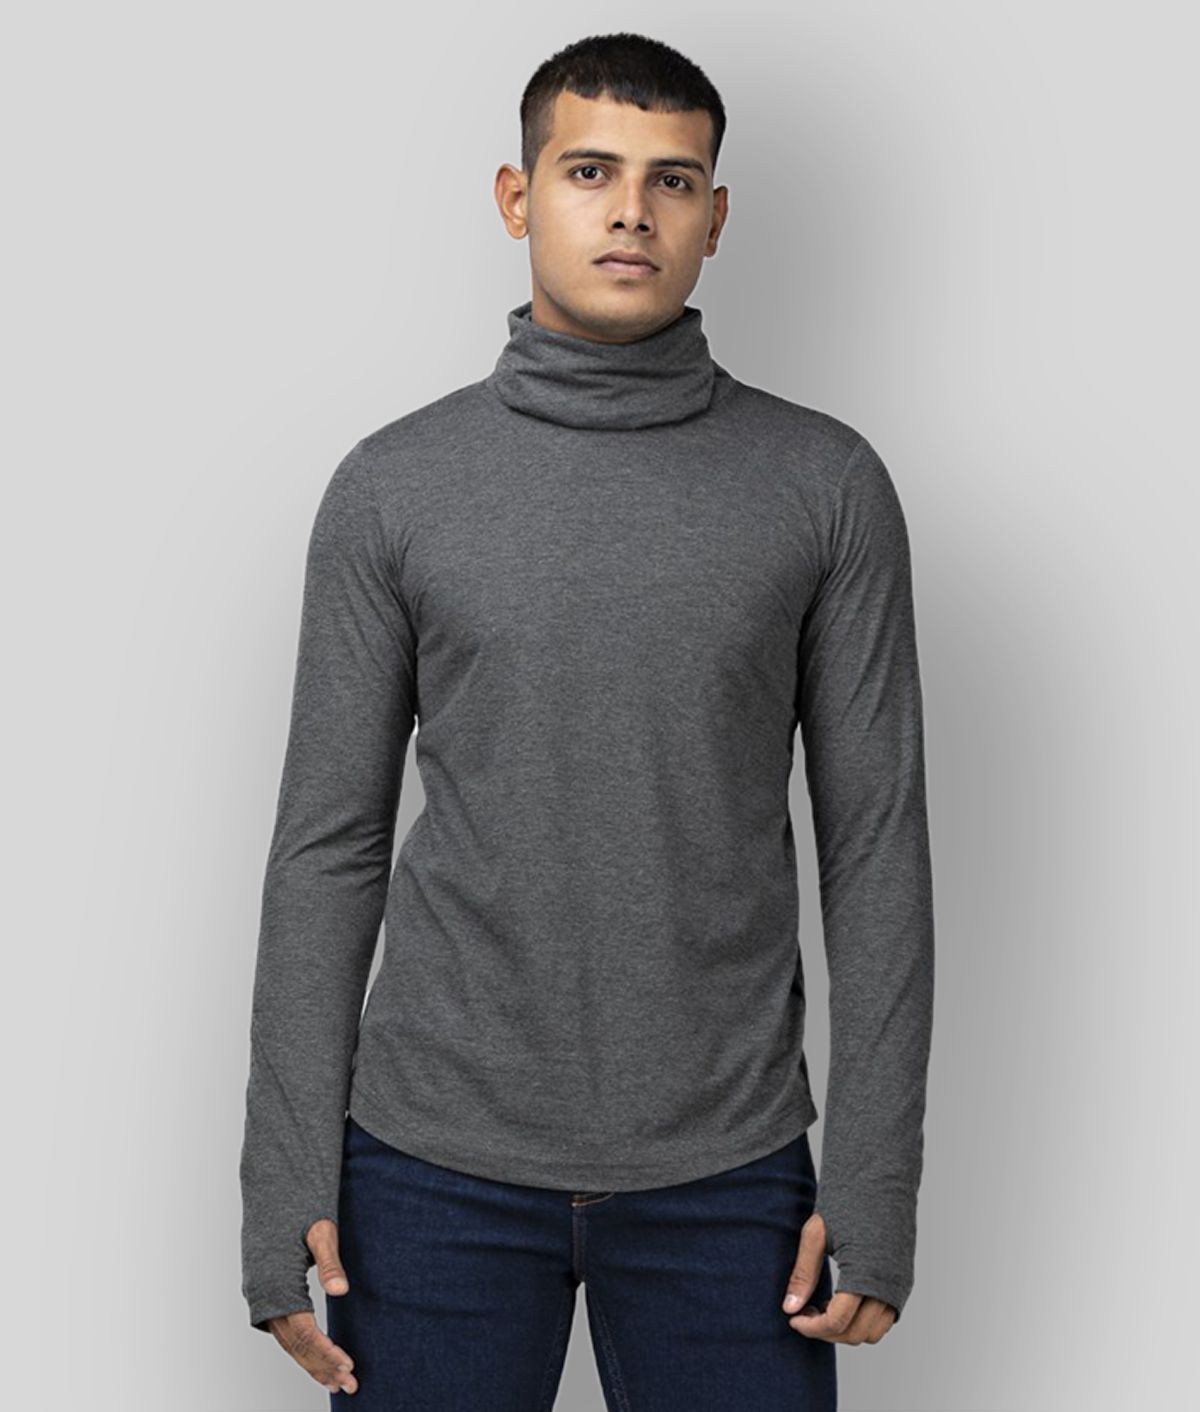     			Rigo - Melange Grey Cotton Slim Fit Men's T-Shirt ( Pack of 1 )